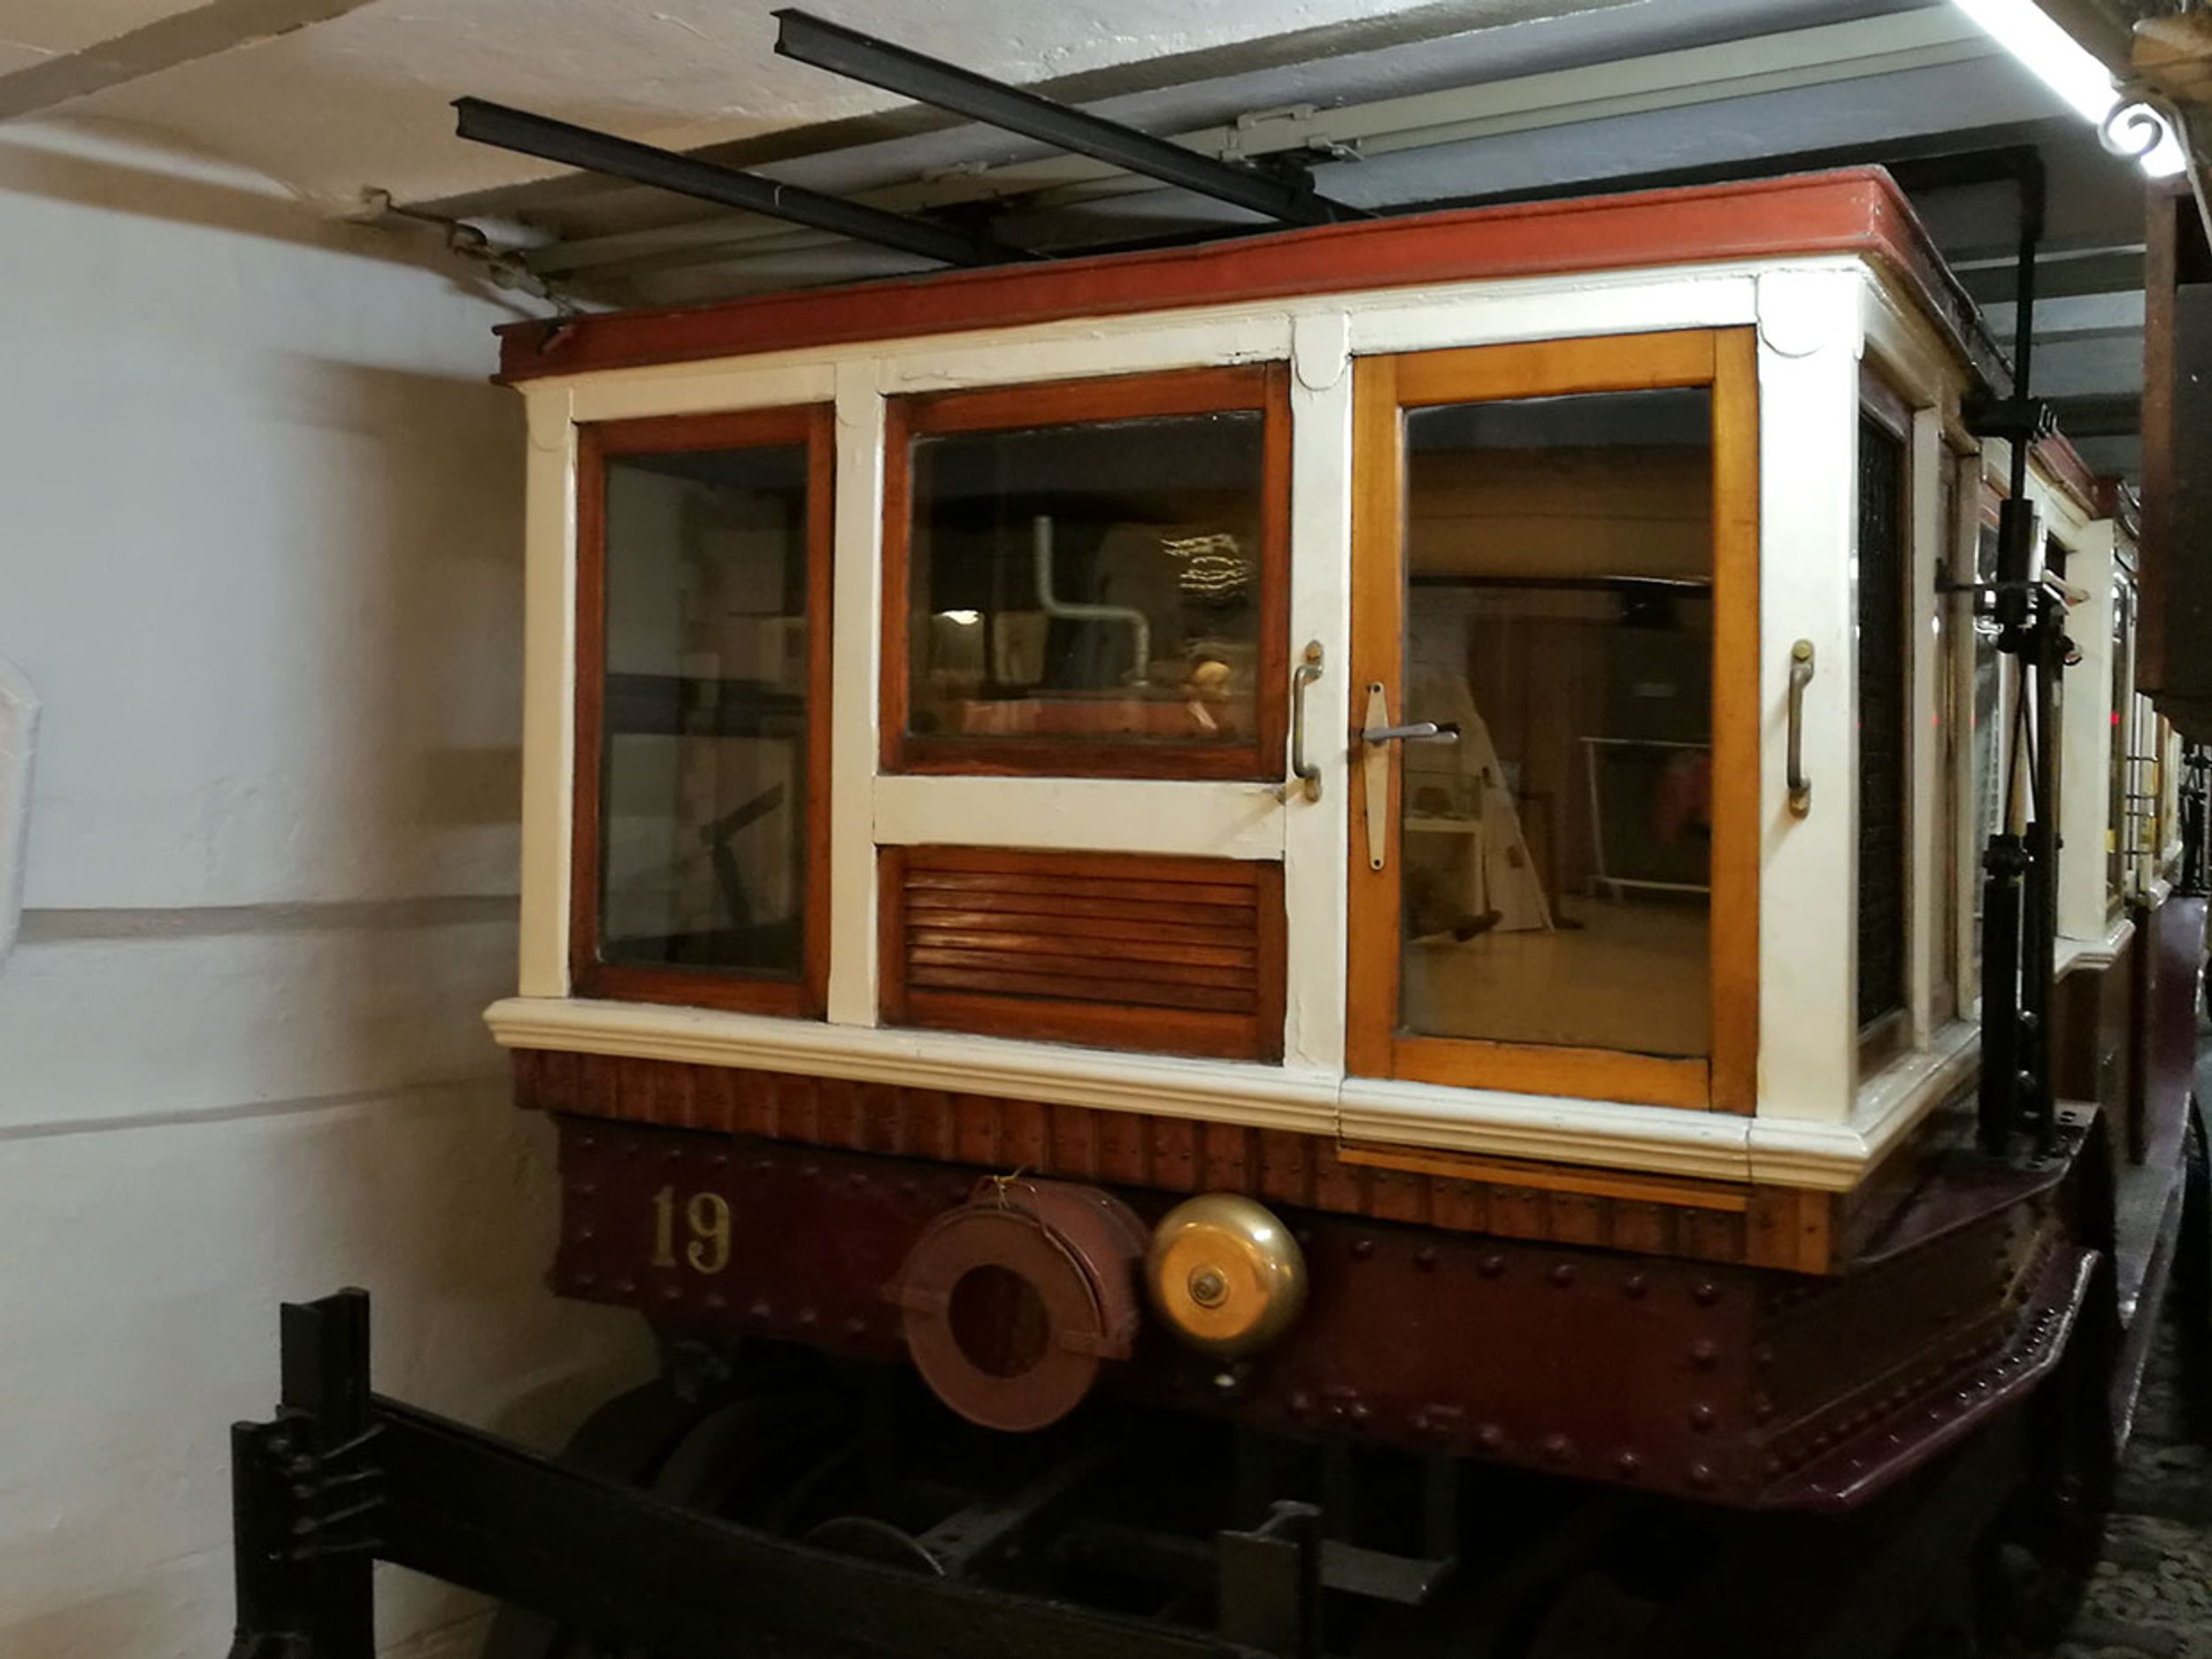 An original tram car of the Budapest Metro Line No. 1 displayed at the Budapest Underground Railway Museum.